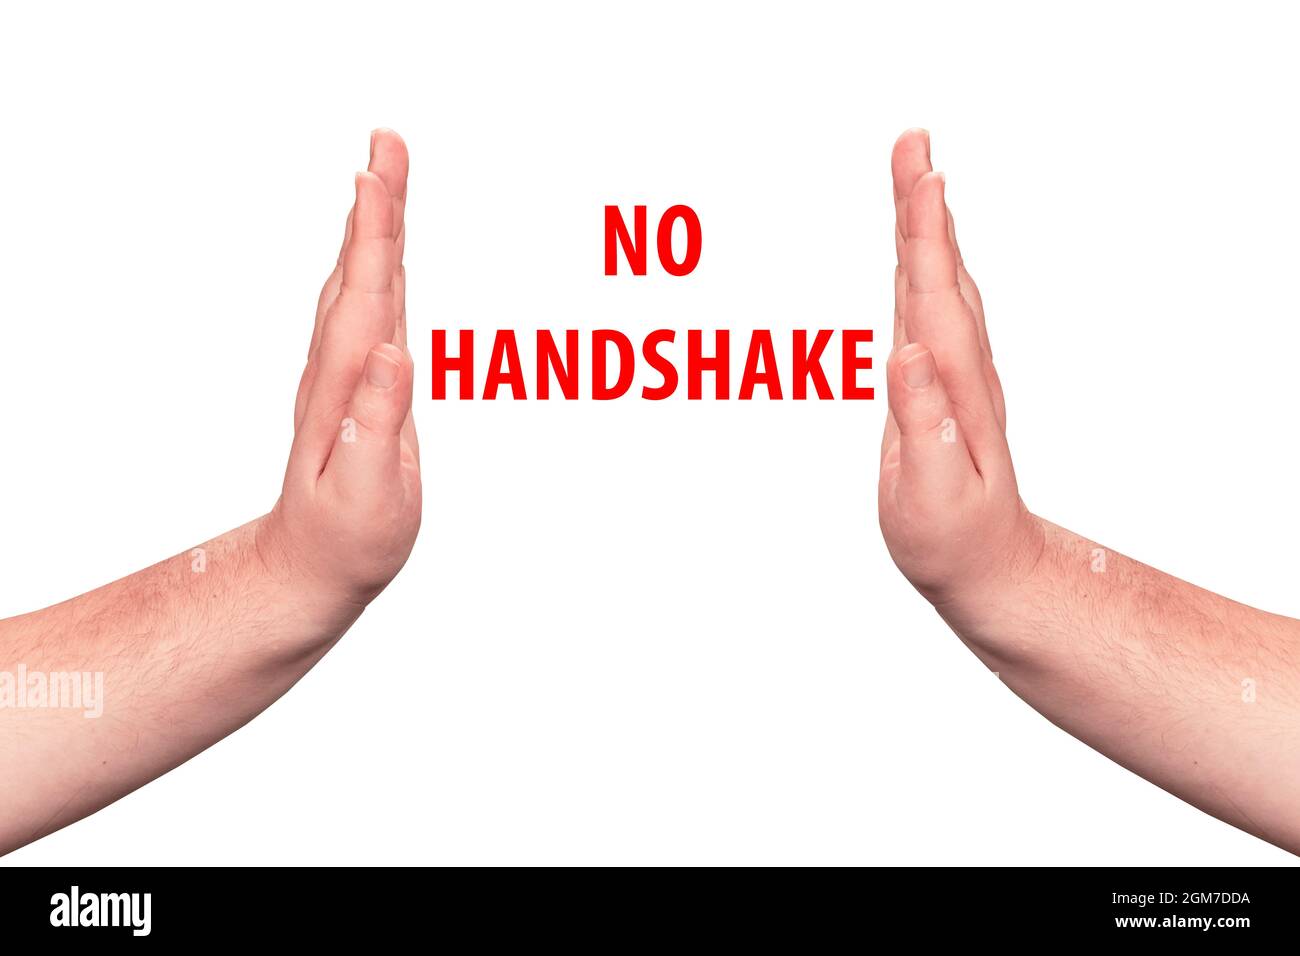 no handshake concept. isolated handshake prohibition sign on white background. Stock Photo